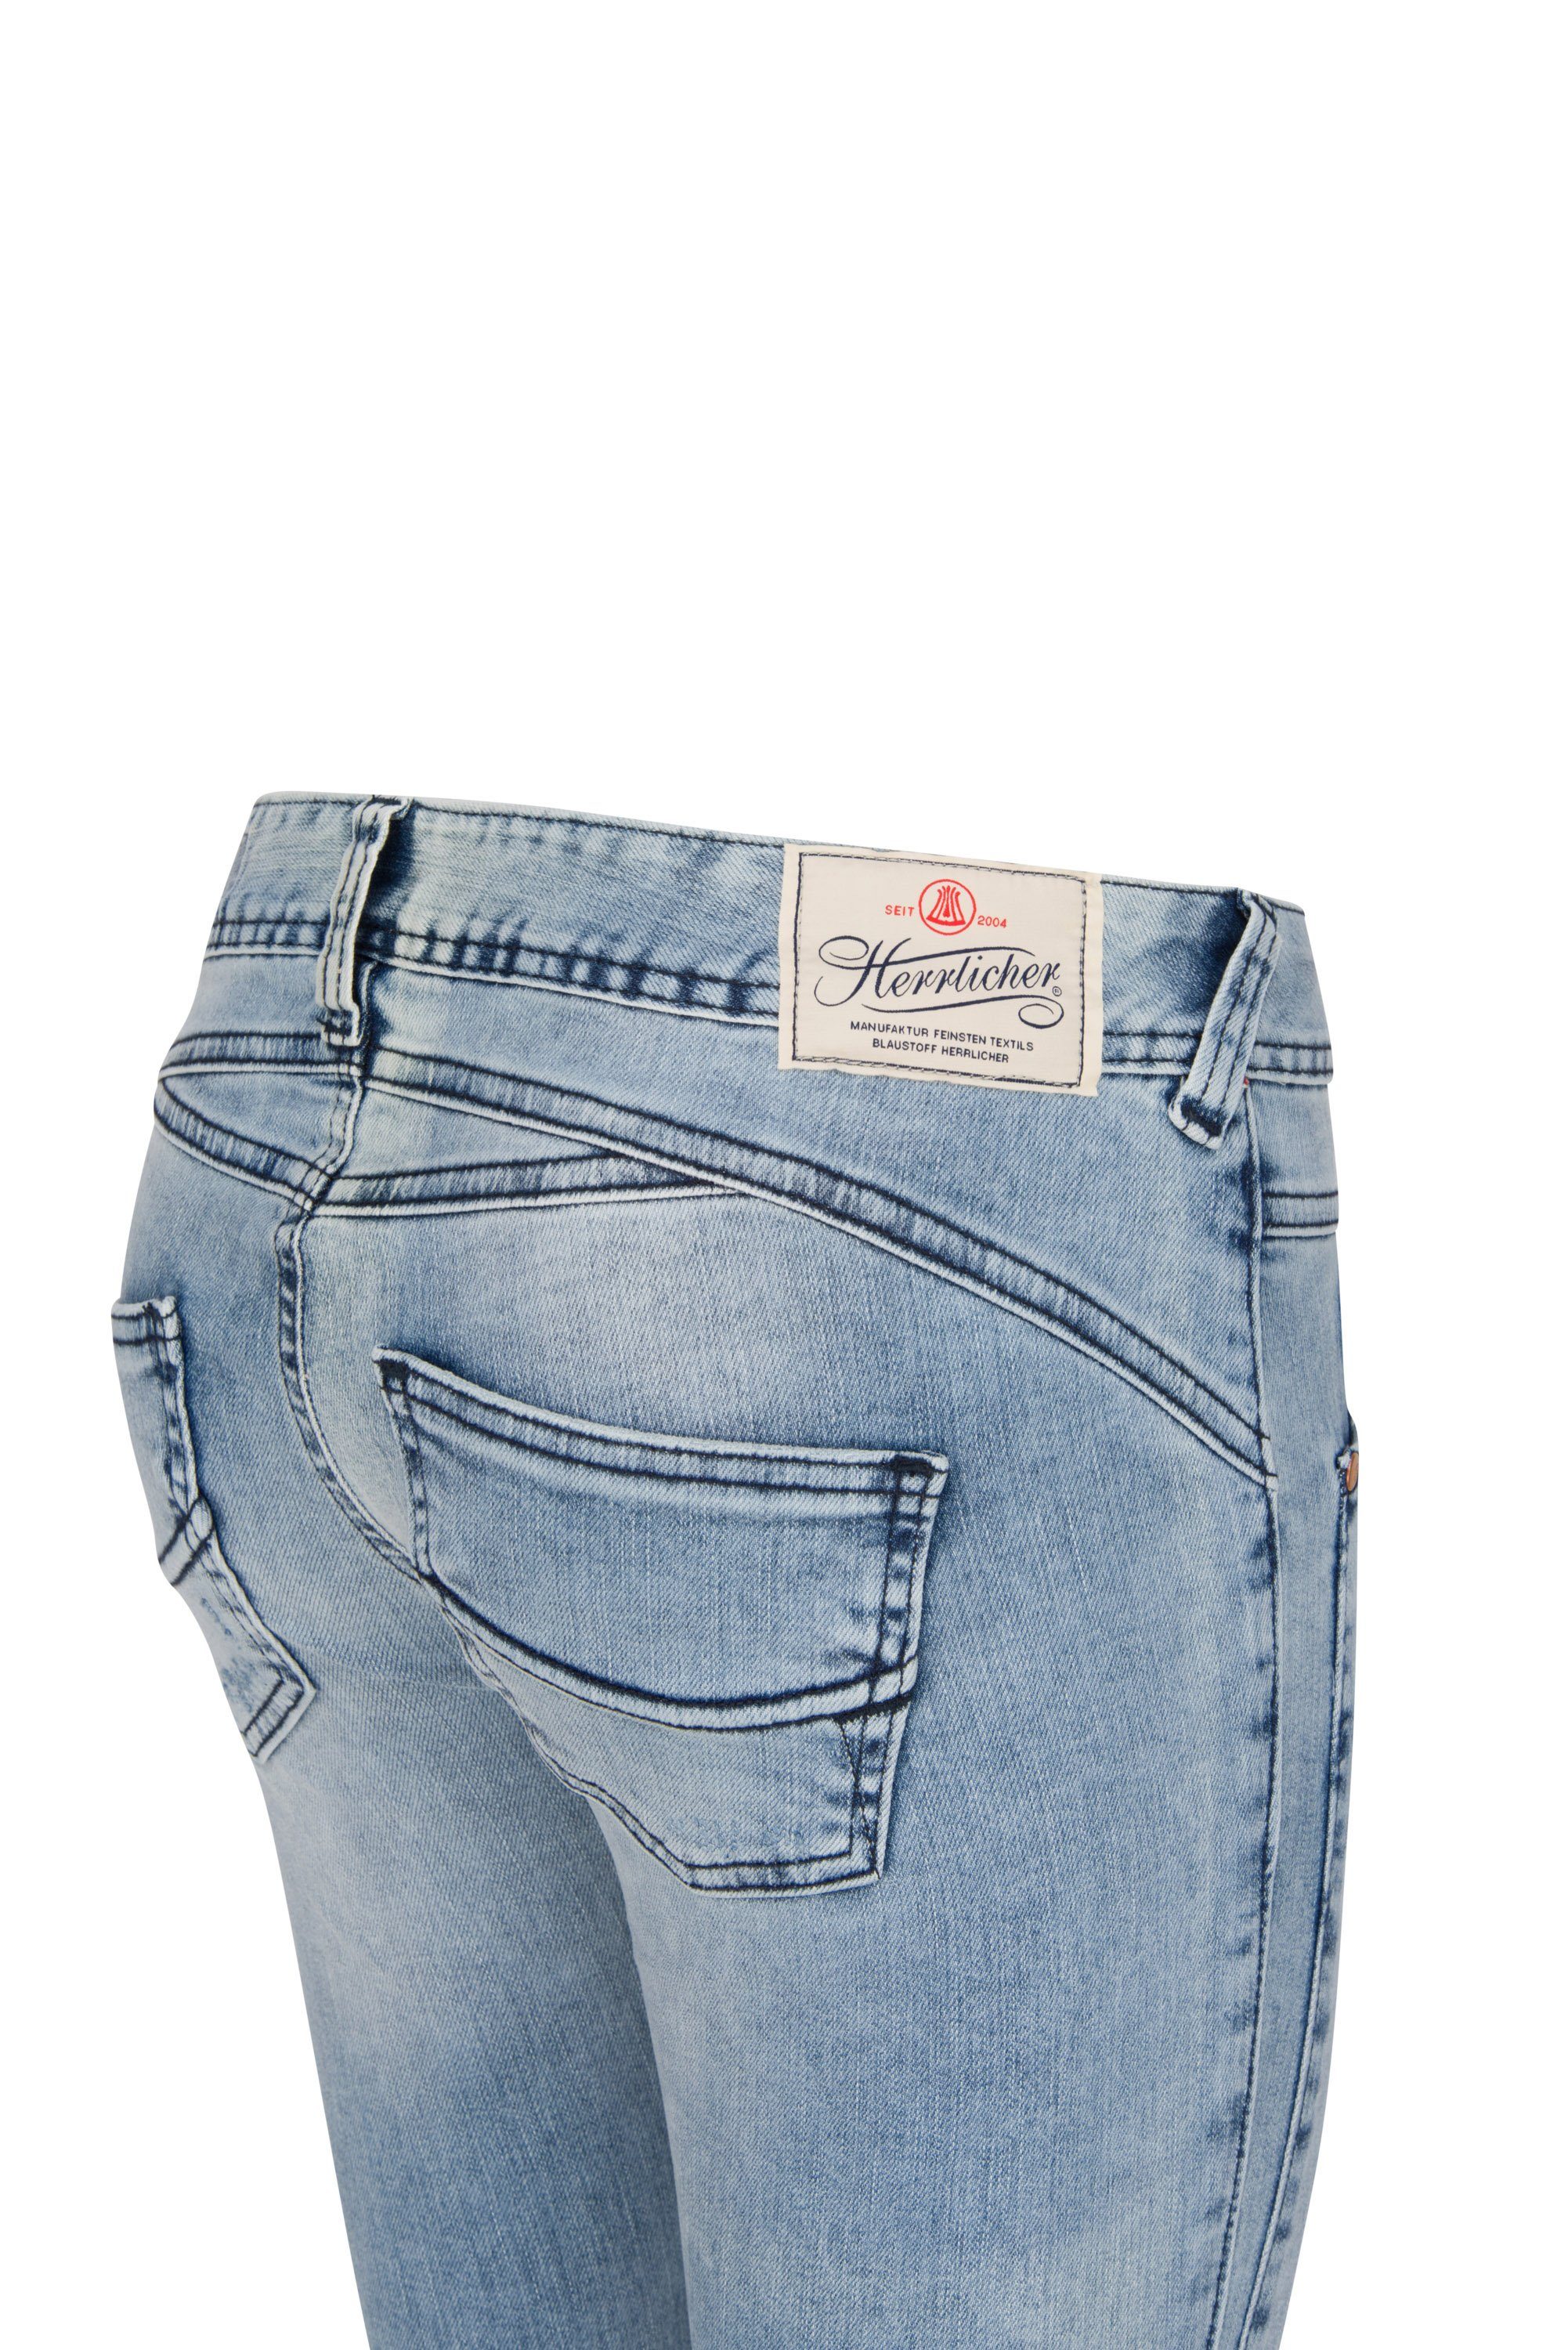 5606-D9666-039 Slim dusty Powerstretch Denim GILA Herrlicher HERRLICHER Stretch-Jeans